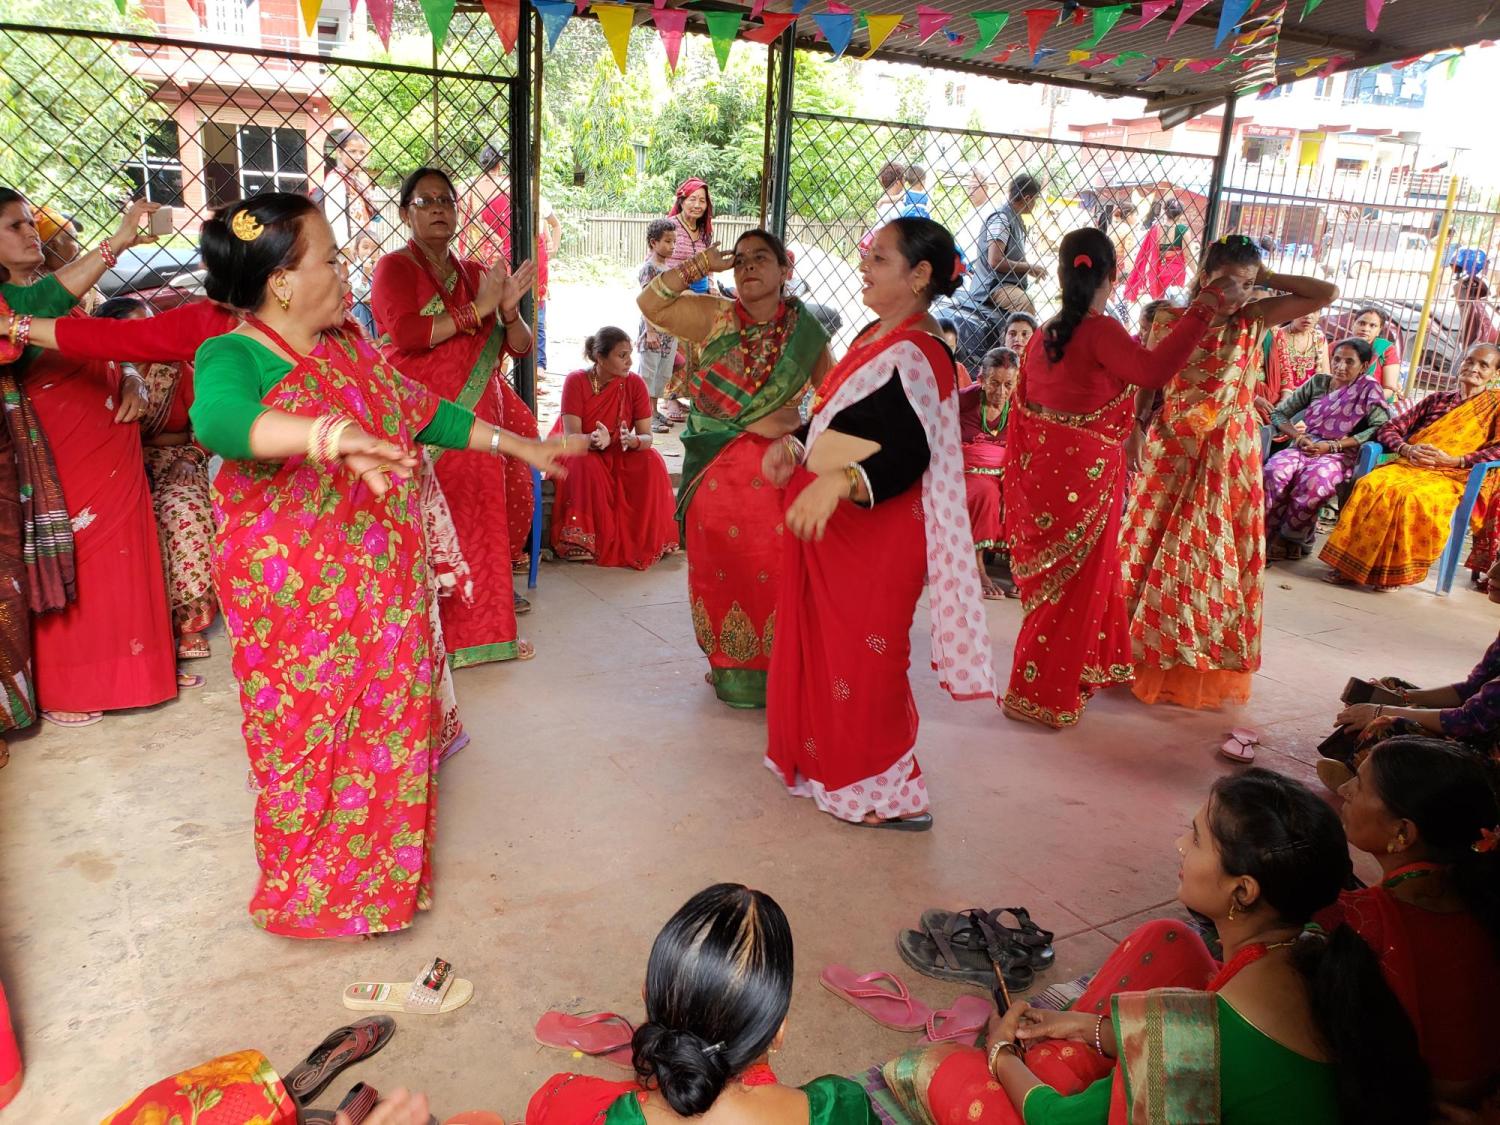 Single women wearing red and celebrating the Teej holiday in Nuwakot.